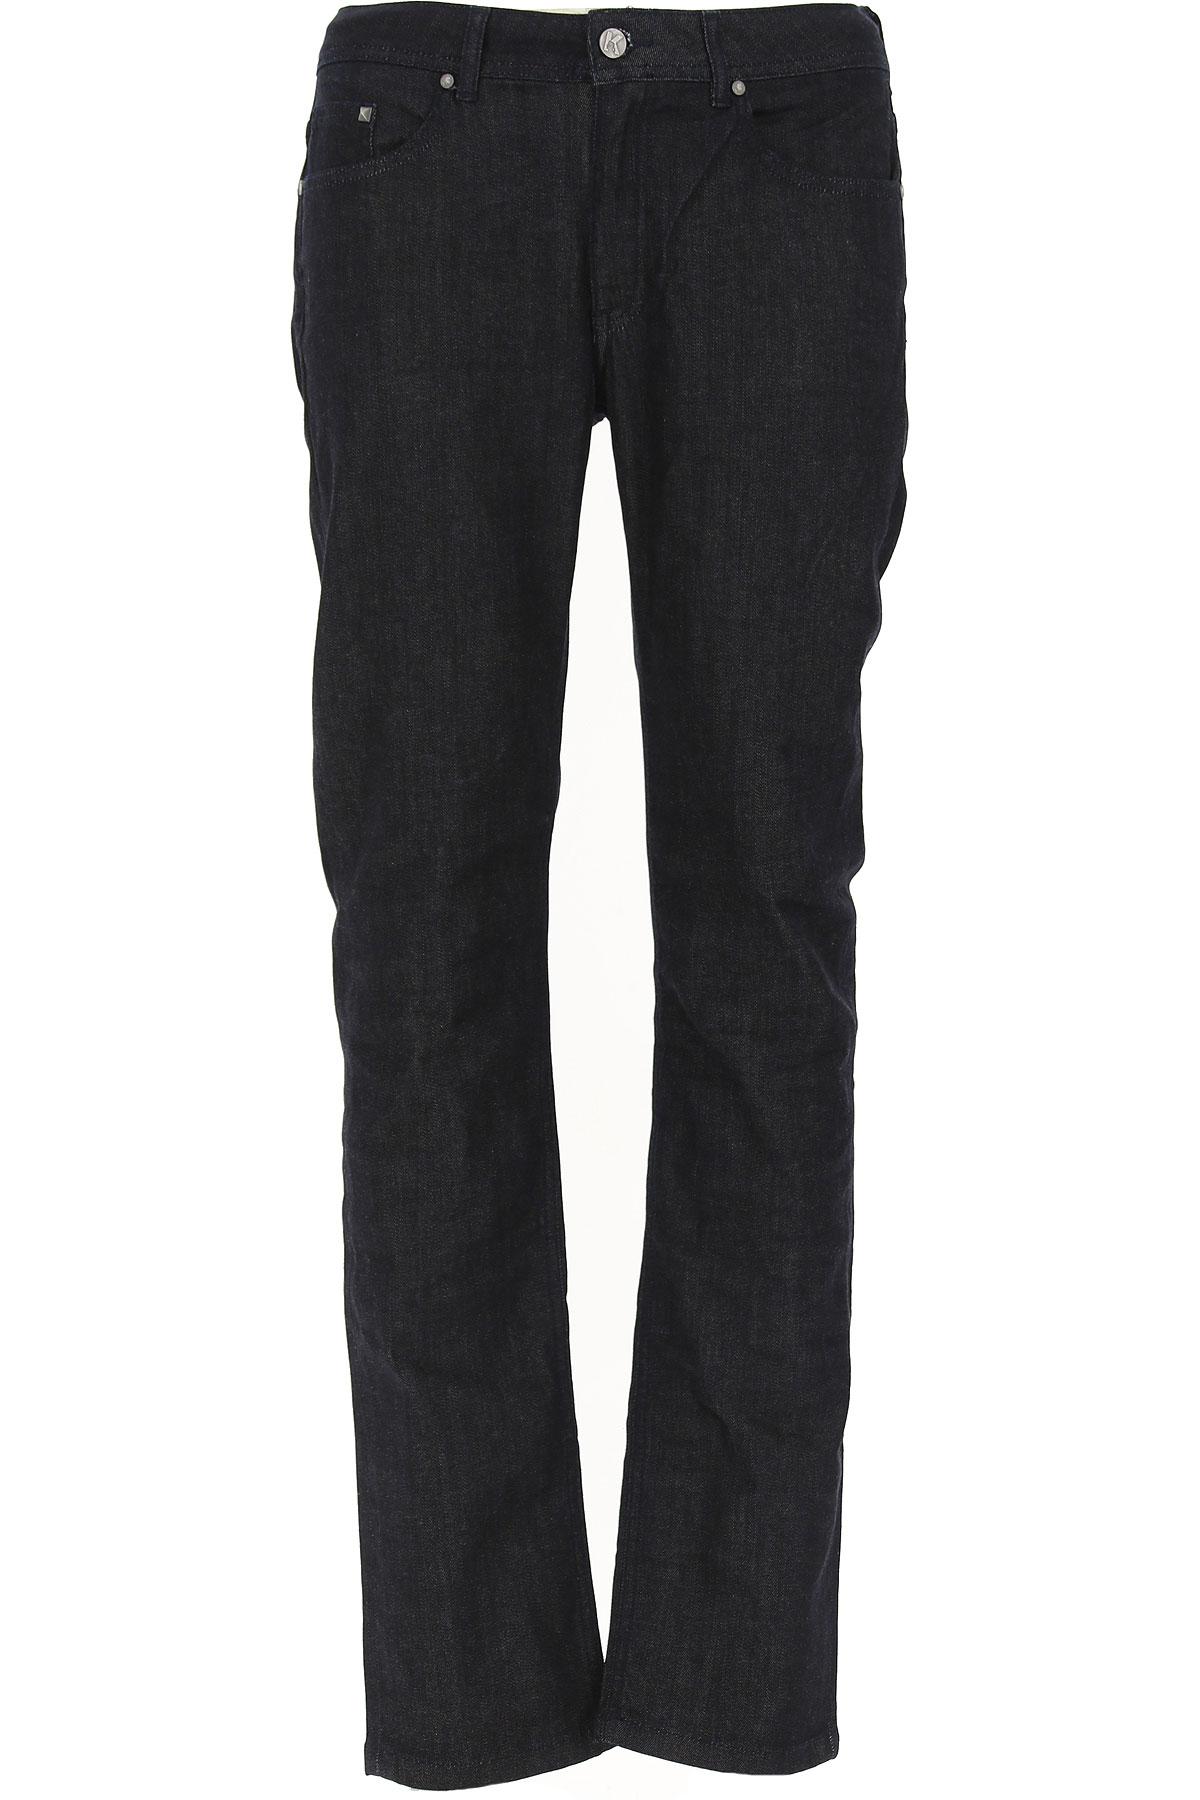 Karl Lagerfeld Denim Jeans On Sale in Dark Denim (Blue) for Men - Lyst